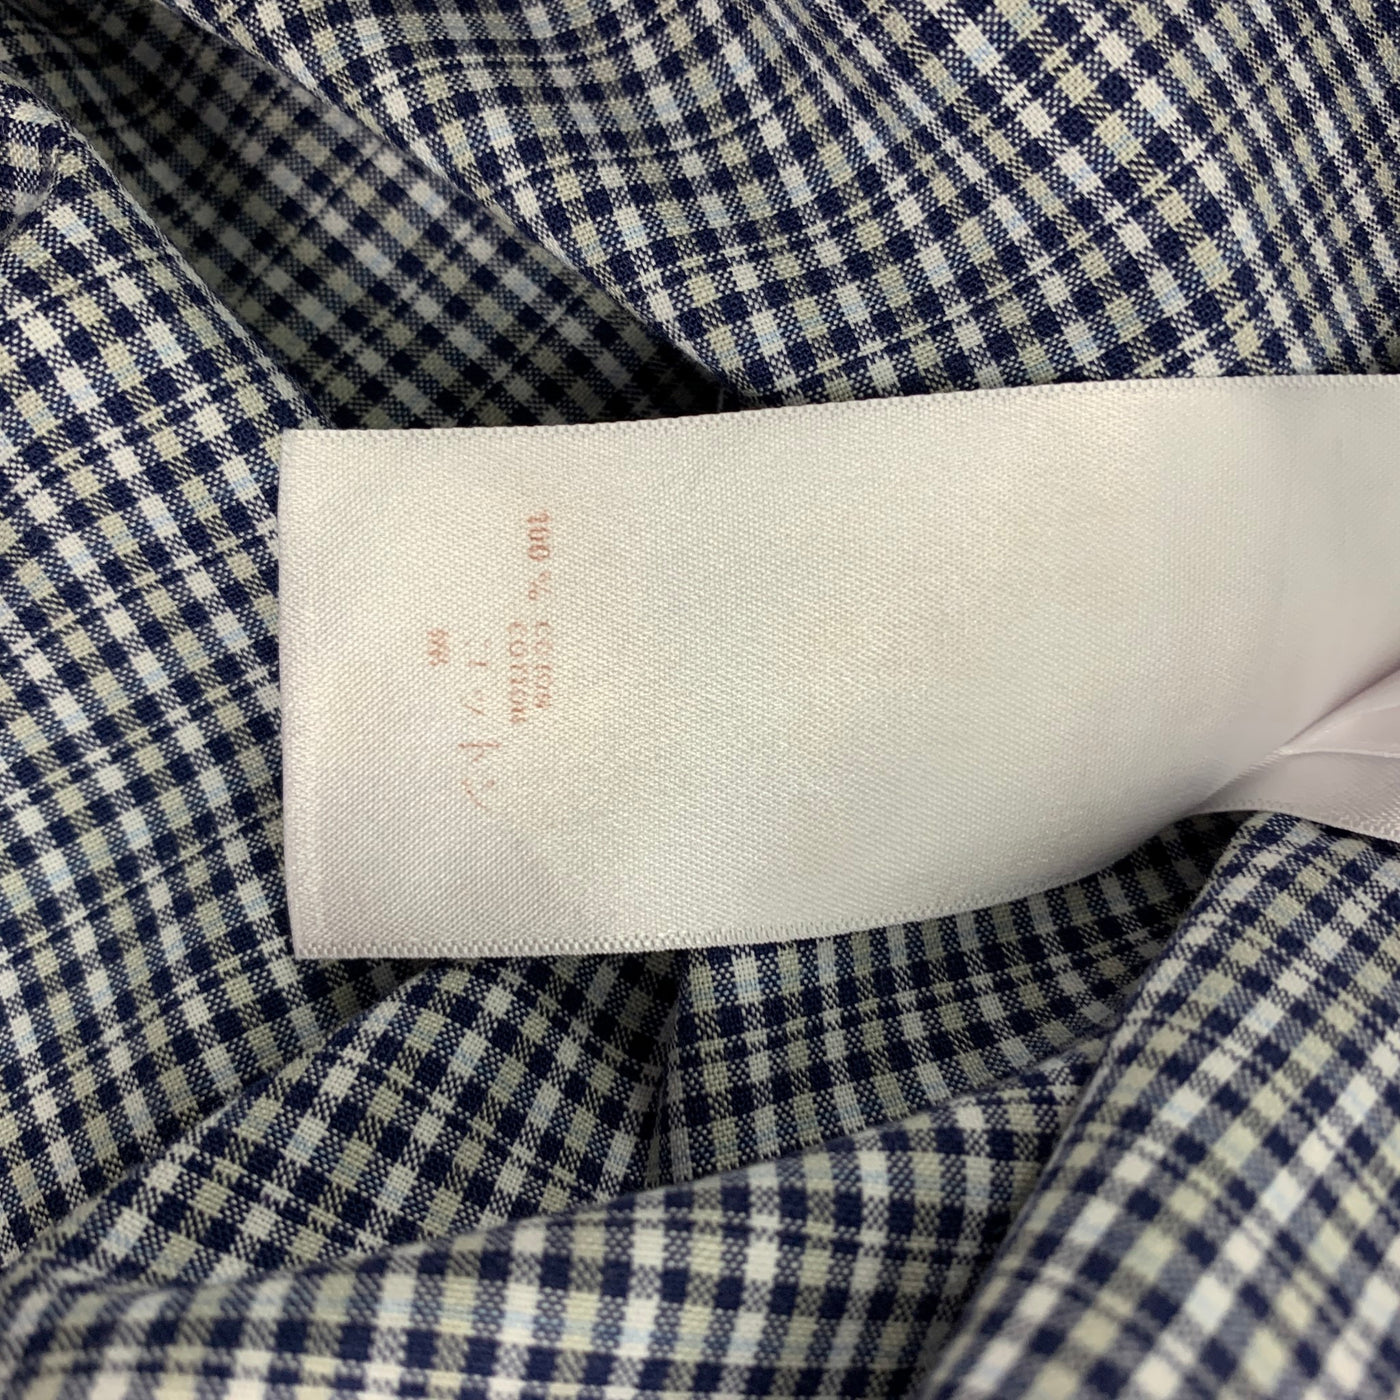 LOUIS VUITTON Size XL White Navy Plaid Cotton Button Up Long